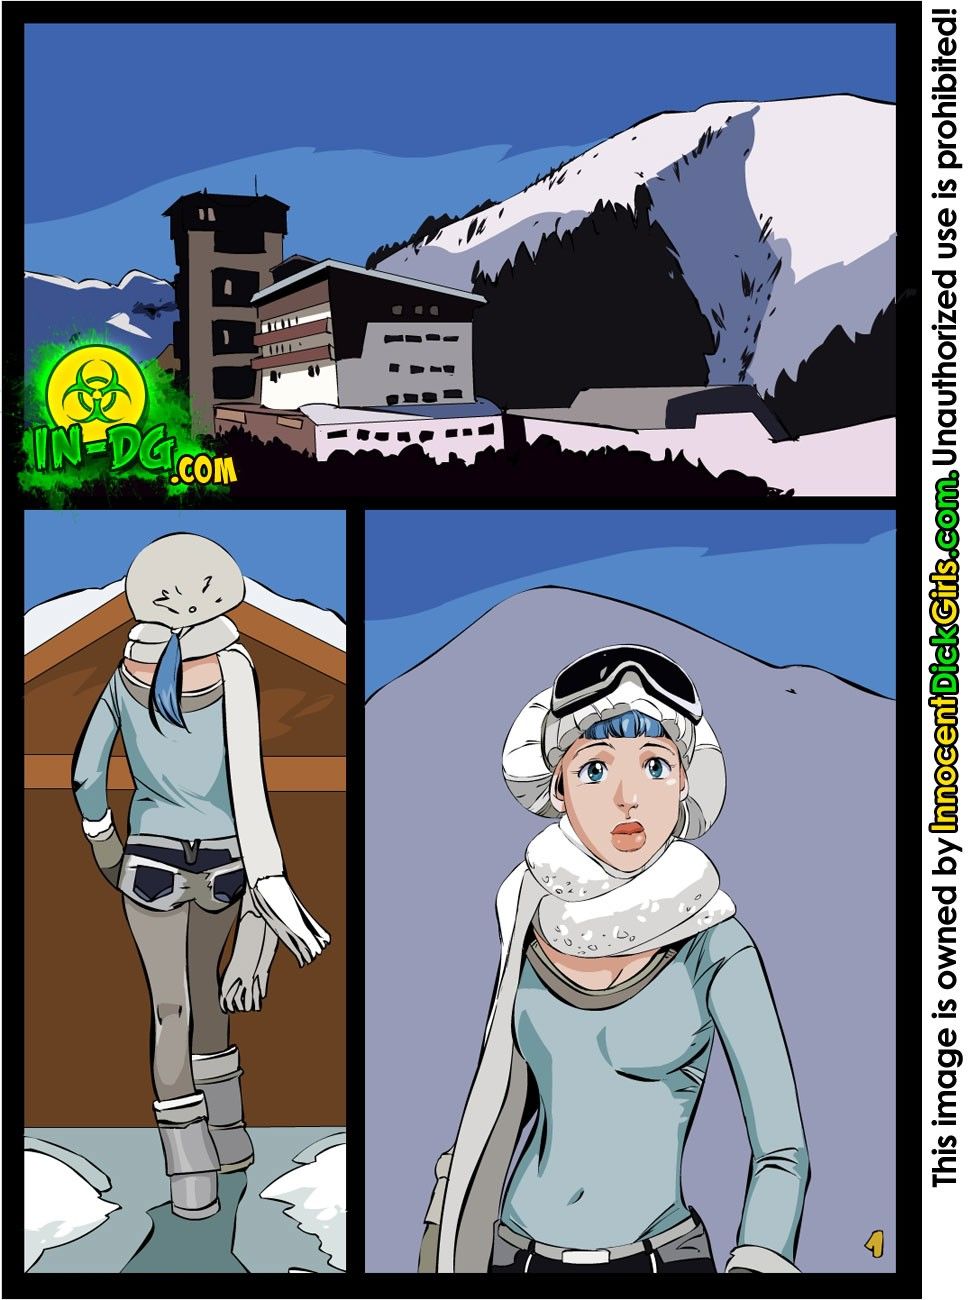 The Free Ski Pass page 1